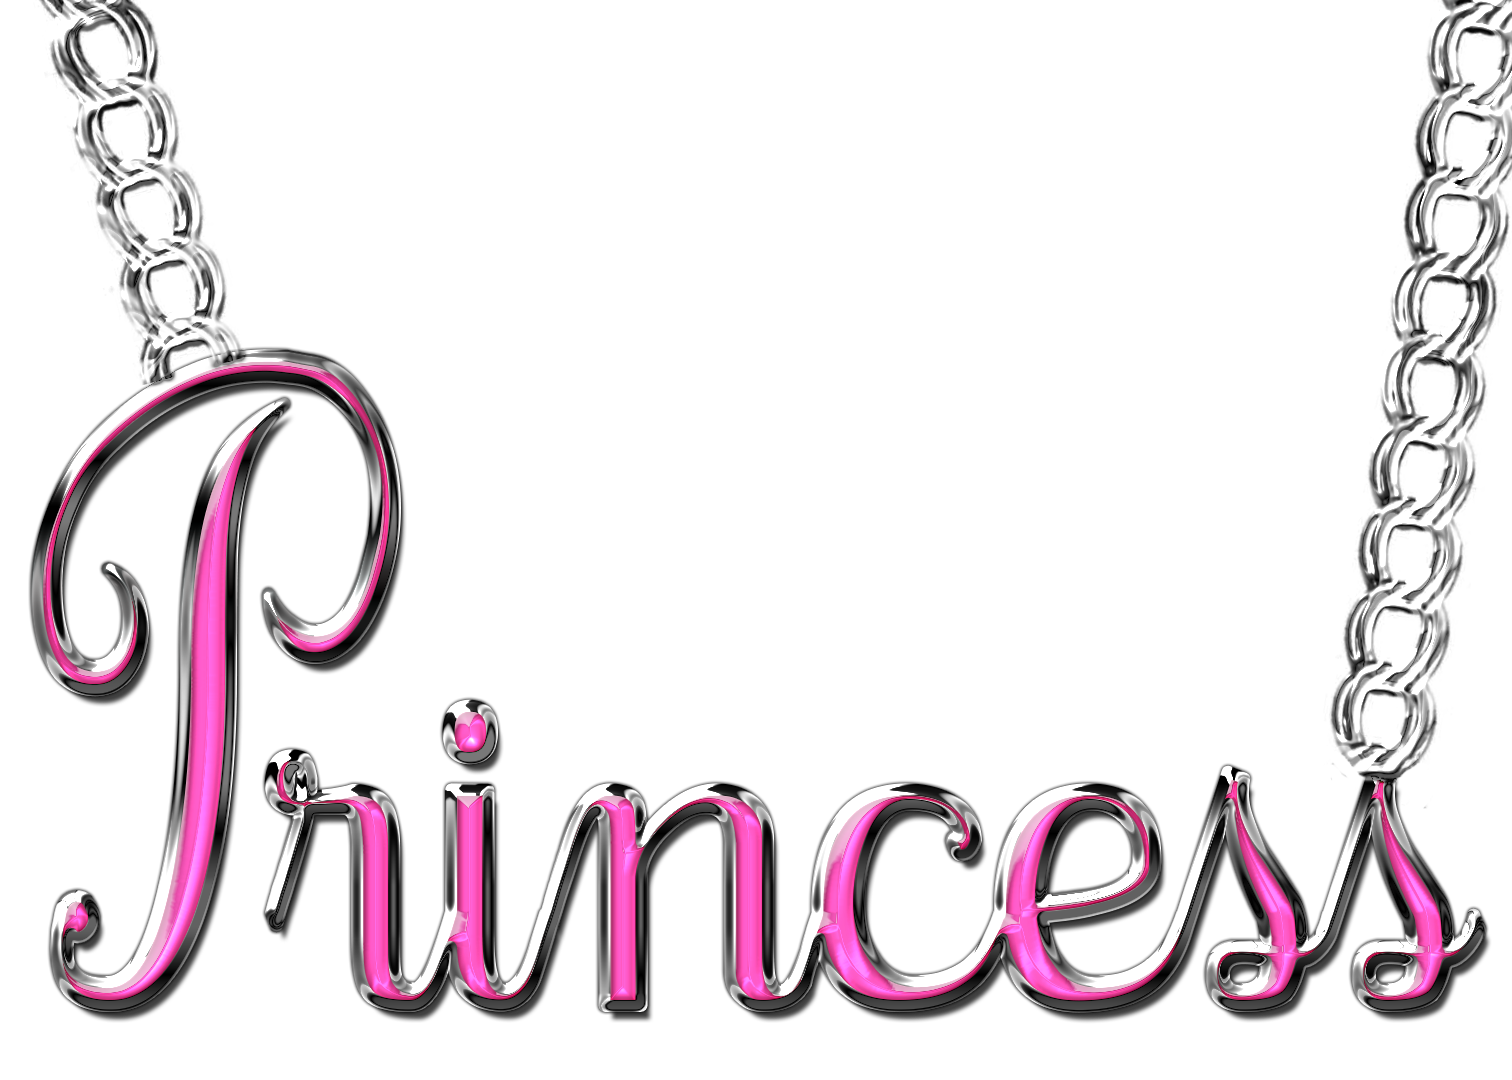 Princess clipart font, Princess font Transparent FREE for ...